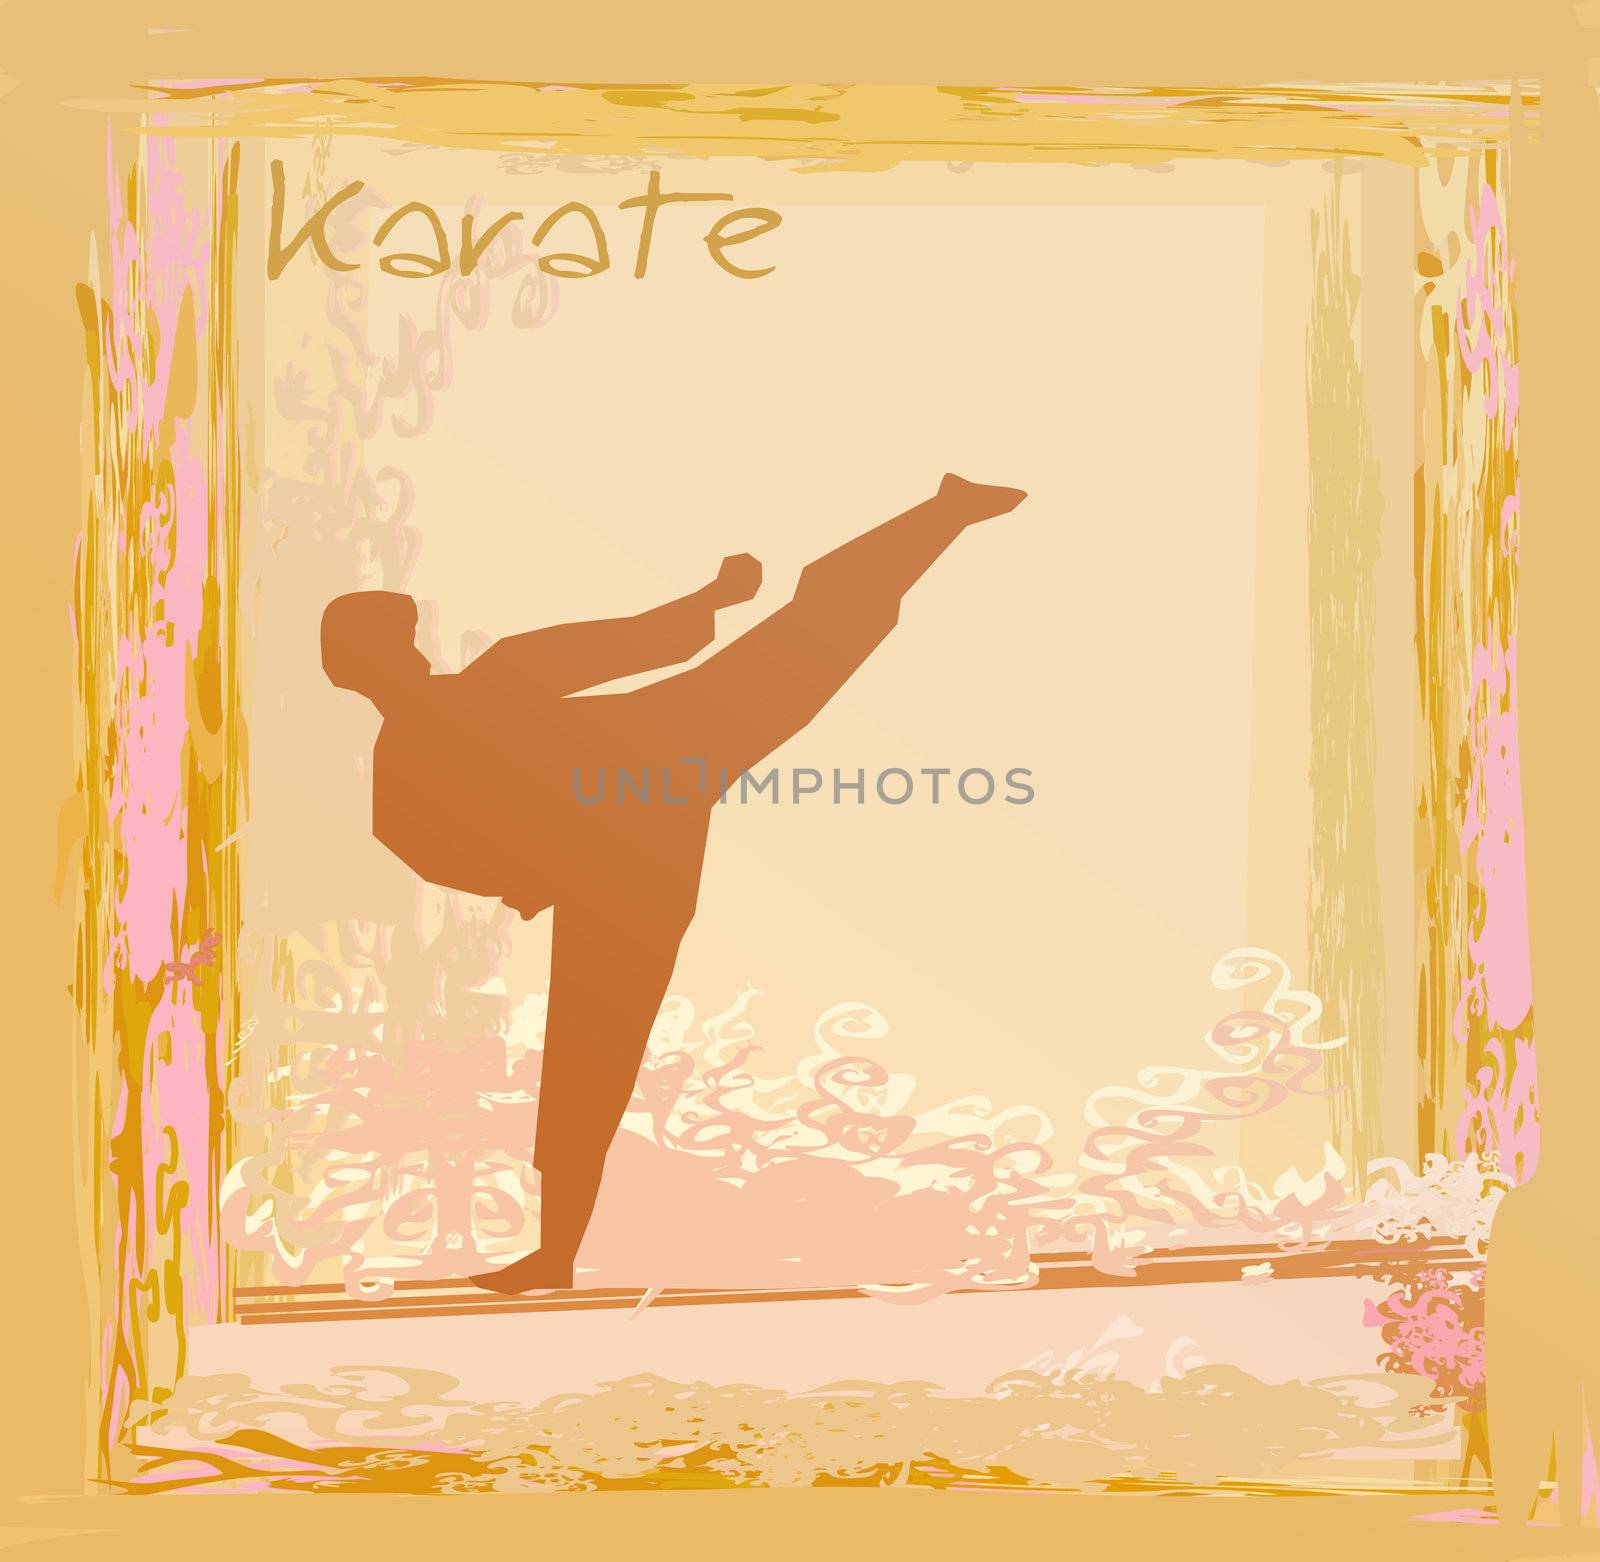 karate Grunge poster by JackyBrown